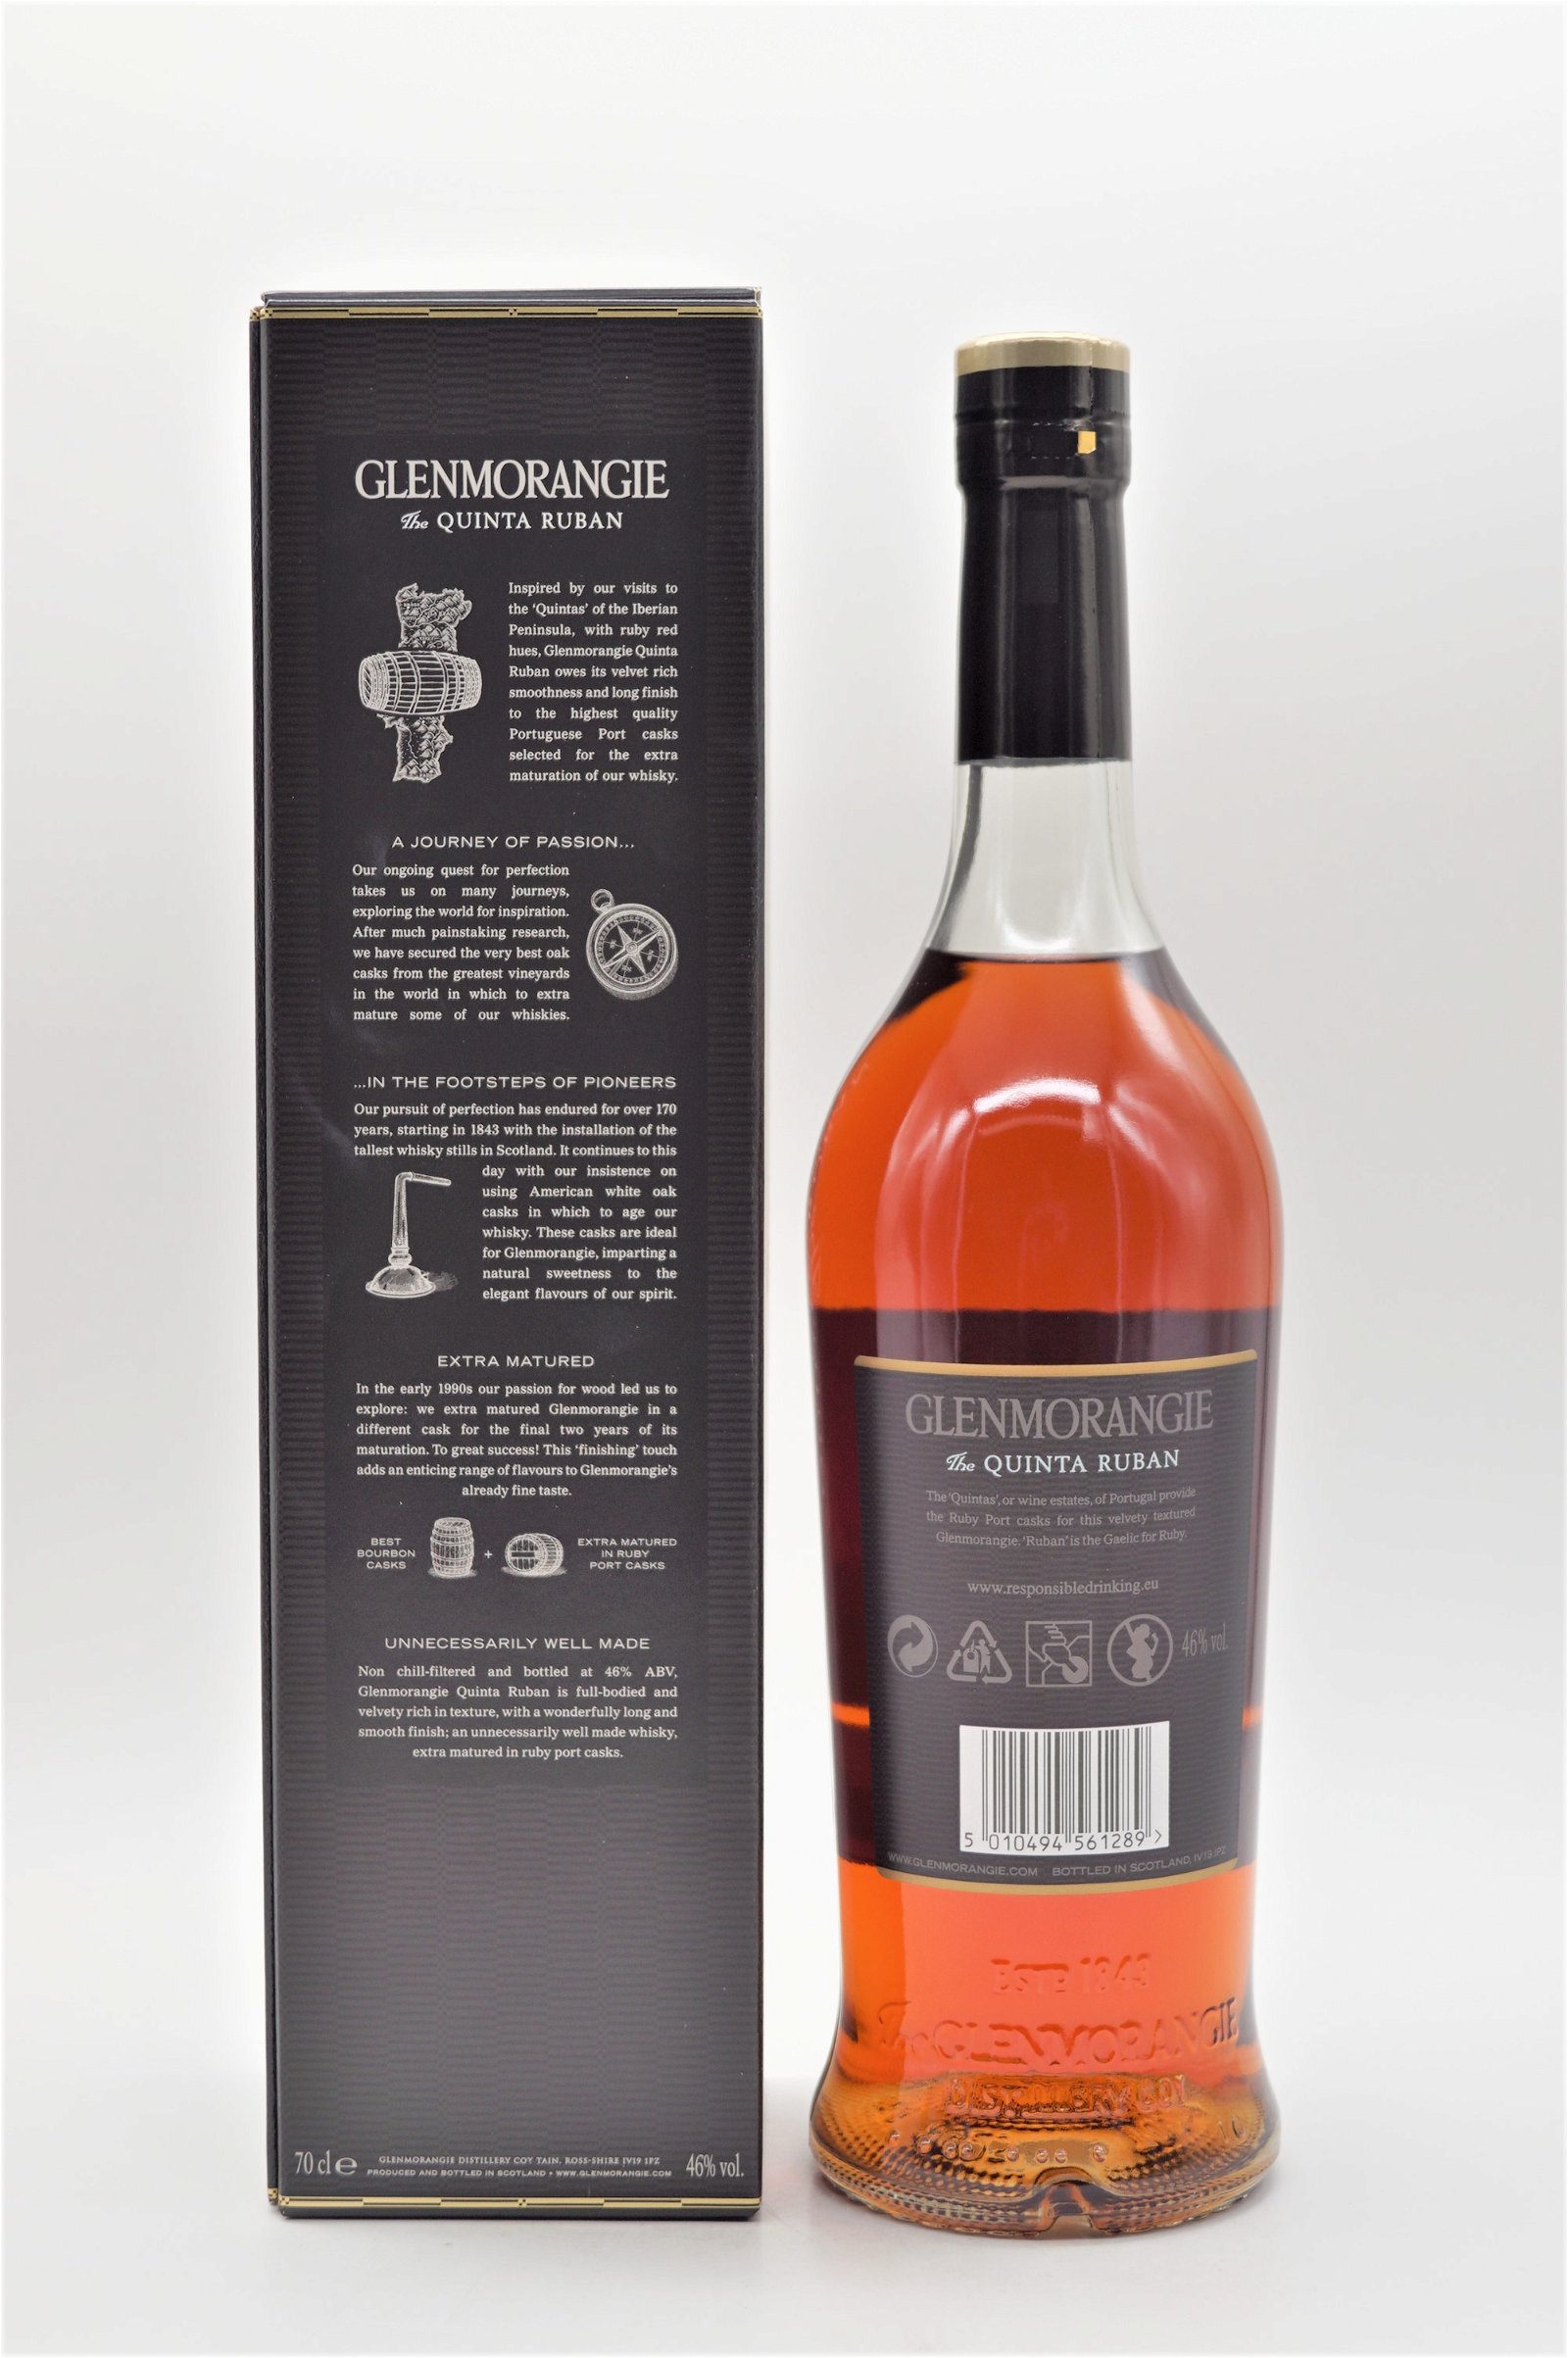 Glenmorangie 12 Jahre The Quinta Ruban Port Cask Finish Highland Single Malt Scotch Whisky